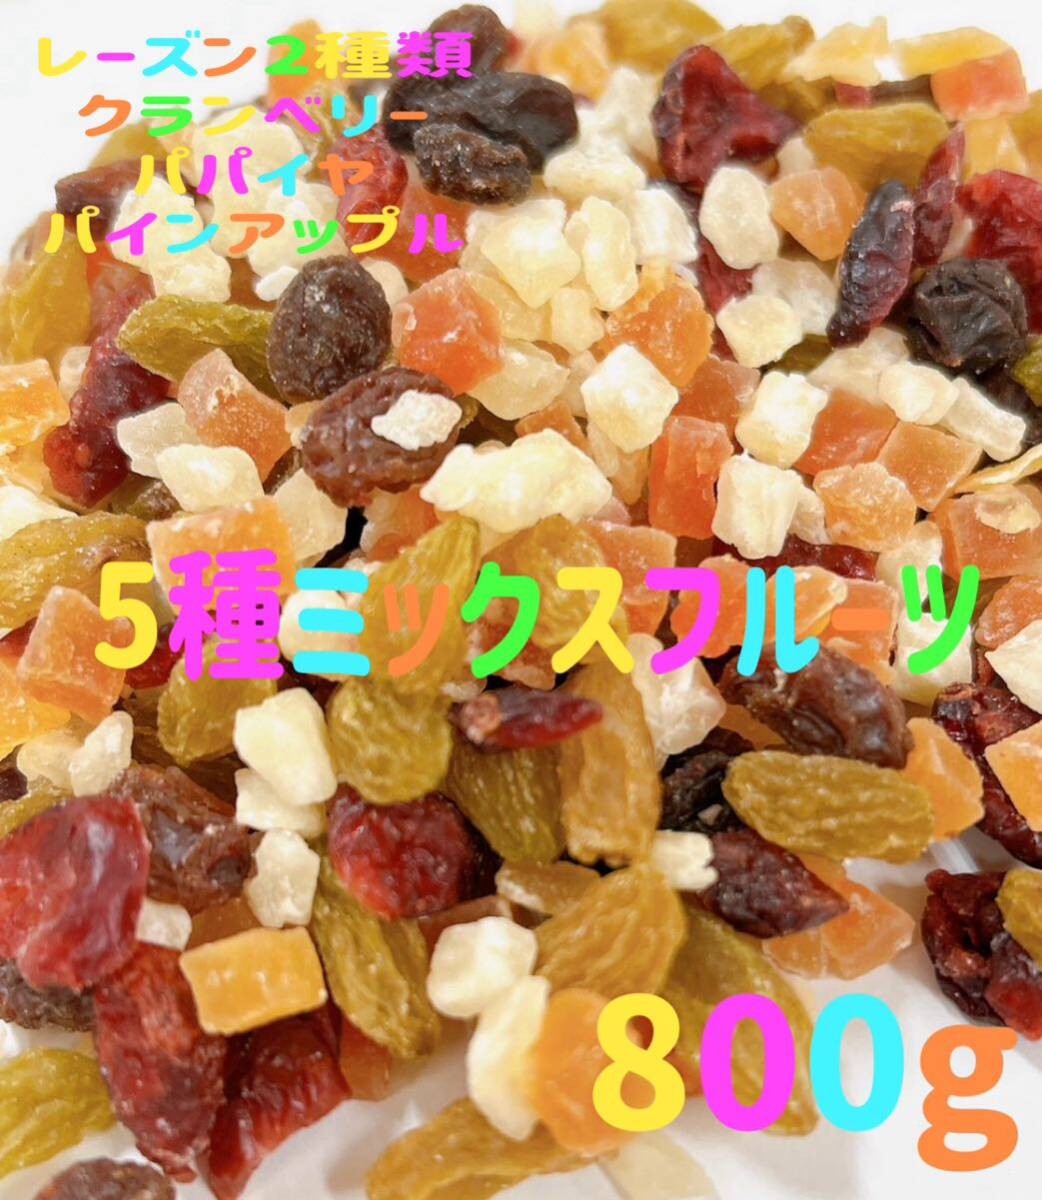 *SALE*5 kind fruit Mix 800g! raisin 2 kind cranberry papaya pine Apple dried fruit 